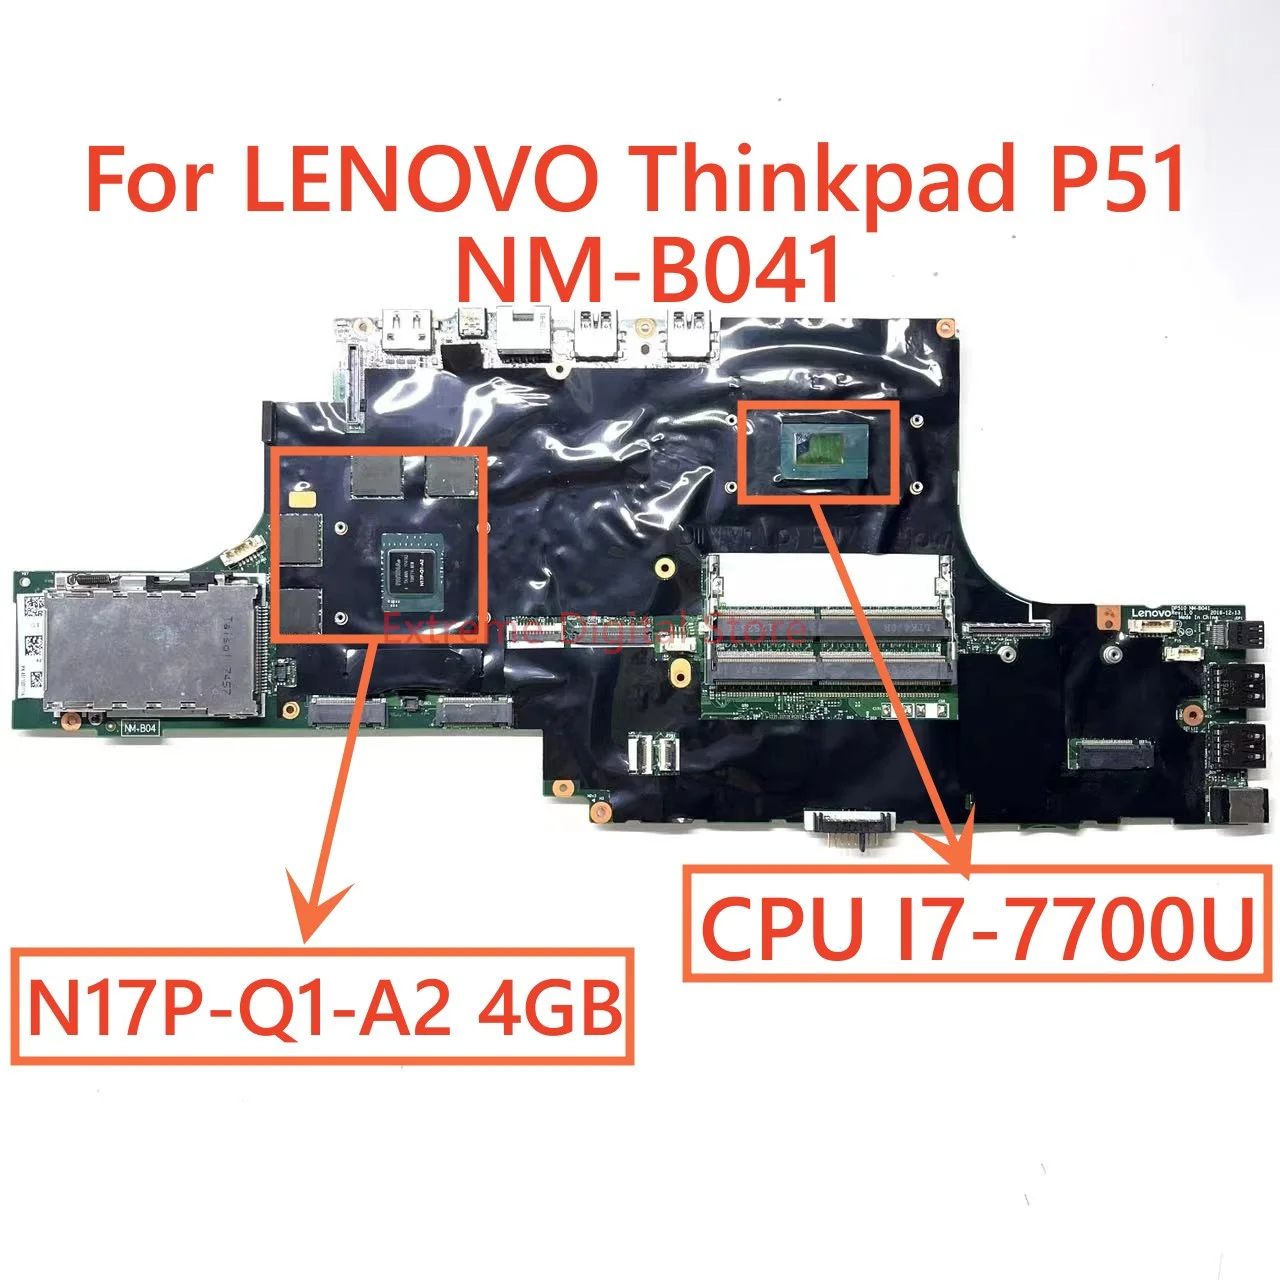 DP510 NM-B041 Для Lenovo Thinkpad P51 Материнская плата Ноутбука С процессором I7-7700HQ GPU N17P-Q1-A2 4G DDR4 100% Протестирована, Полностью Работает